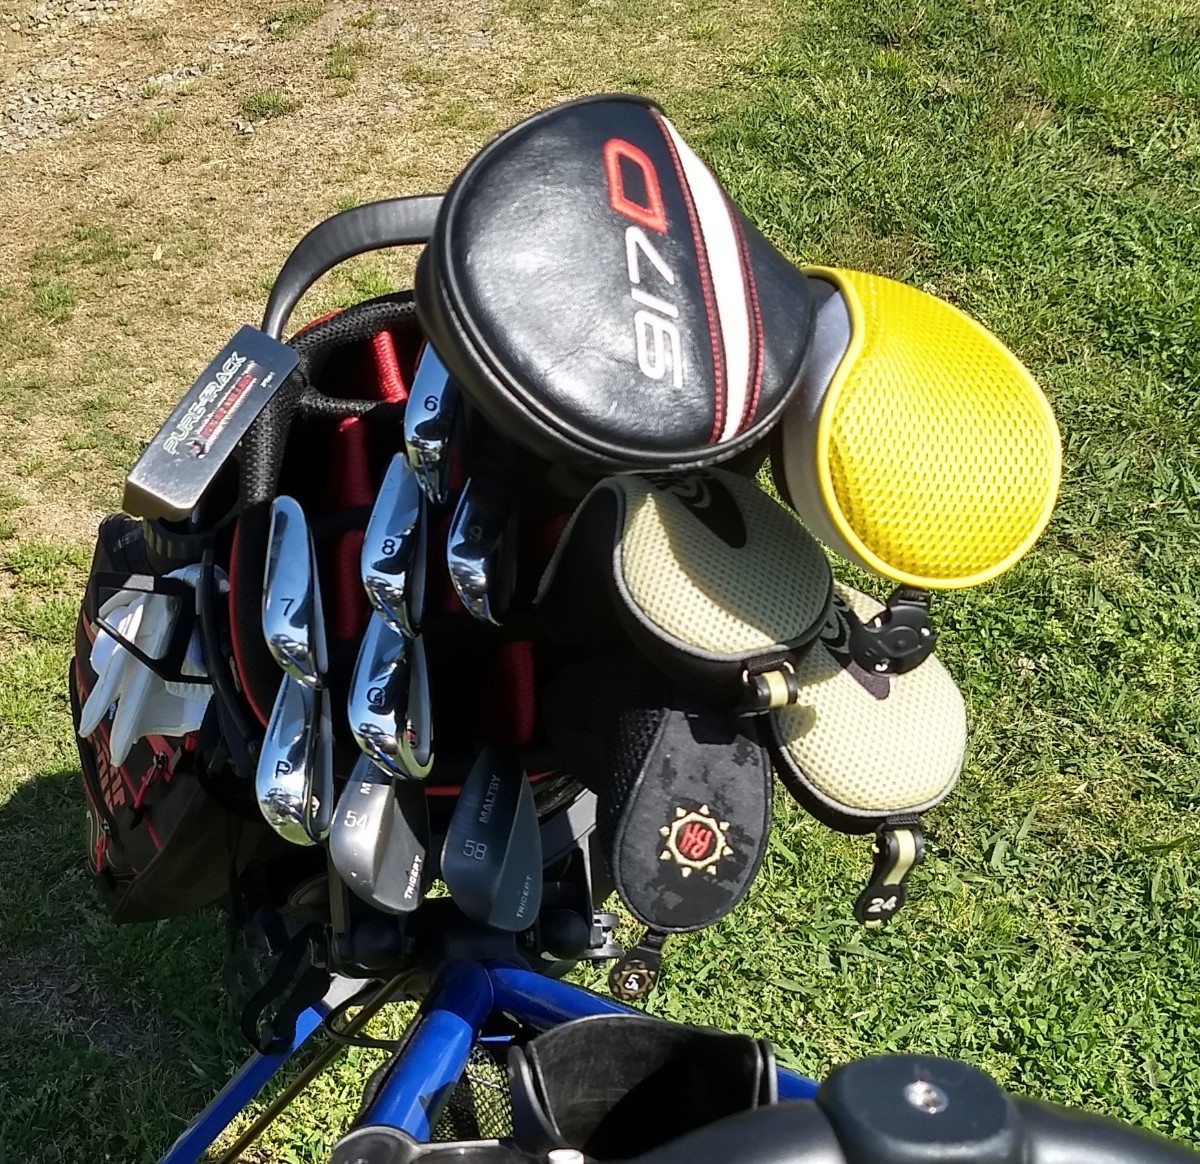 Setting up golf bag for push cart - Bags & Carts - MyGolfSpy Forum